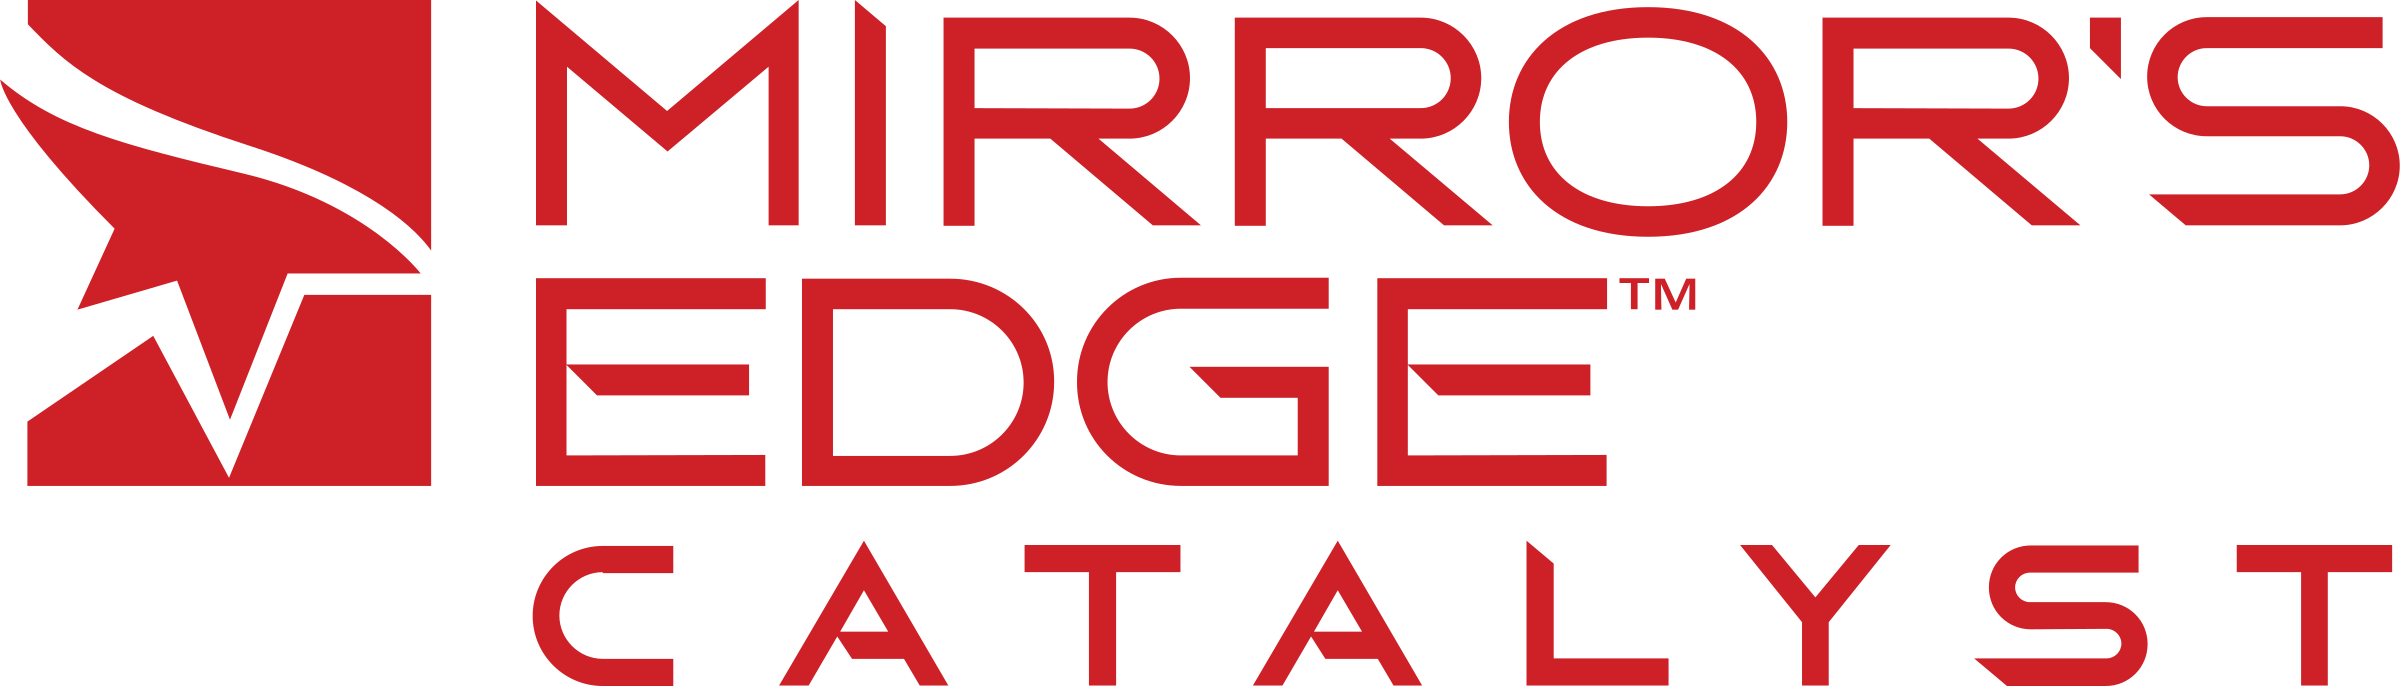 Mirrors Edge Logo PNG HD Quality